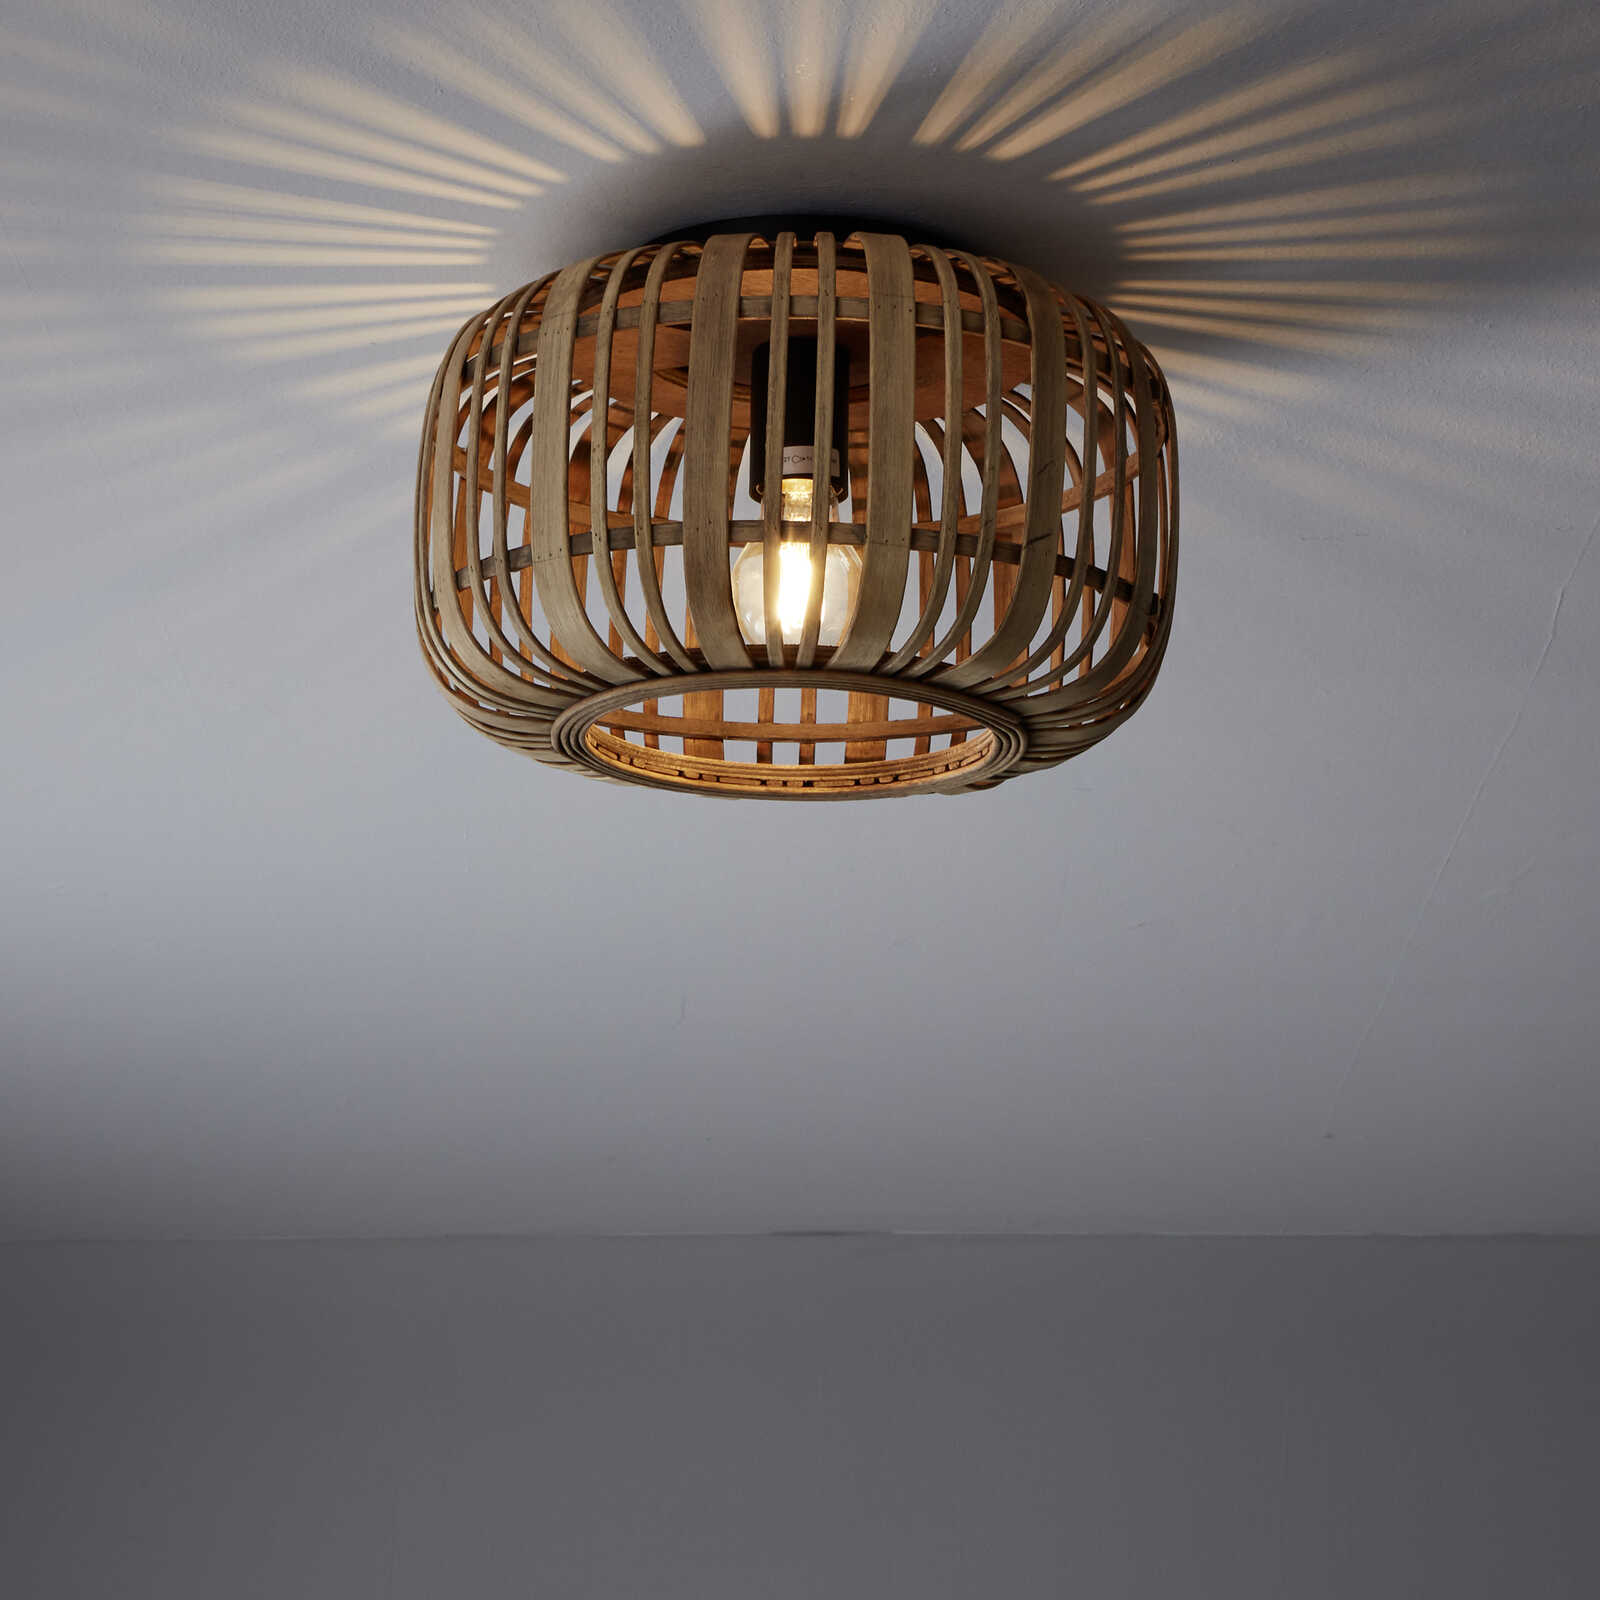             Bamboe plafondlamp - Willi 4 - Bruin
        